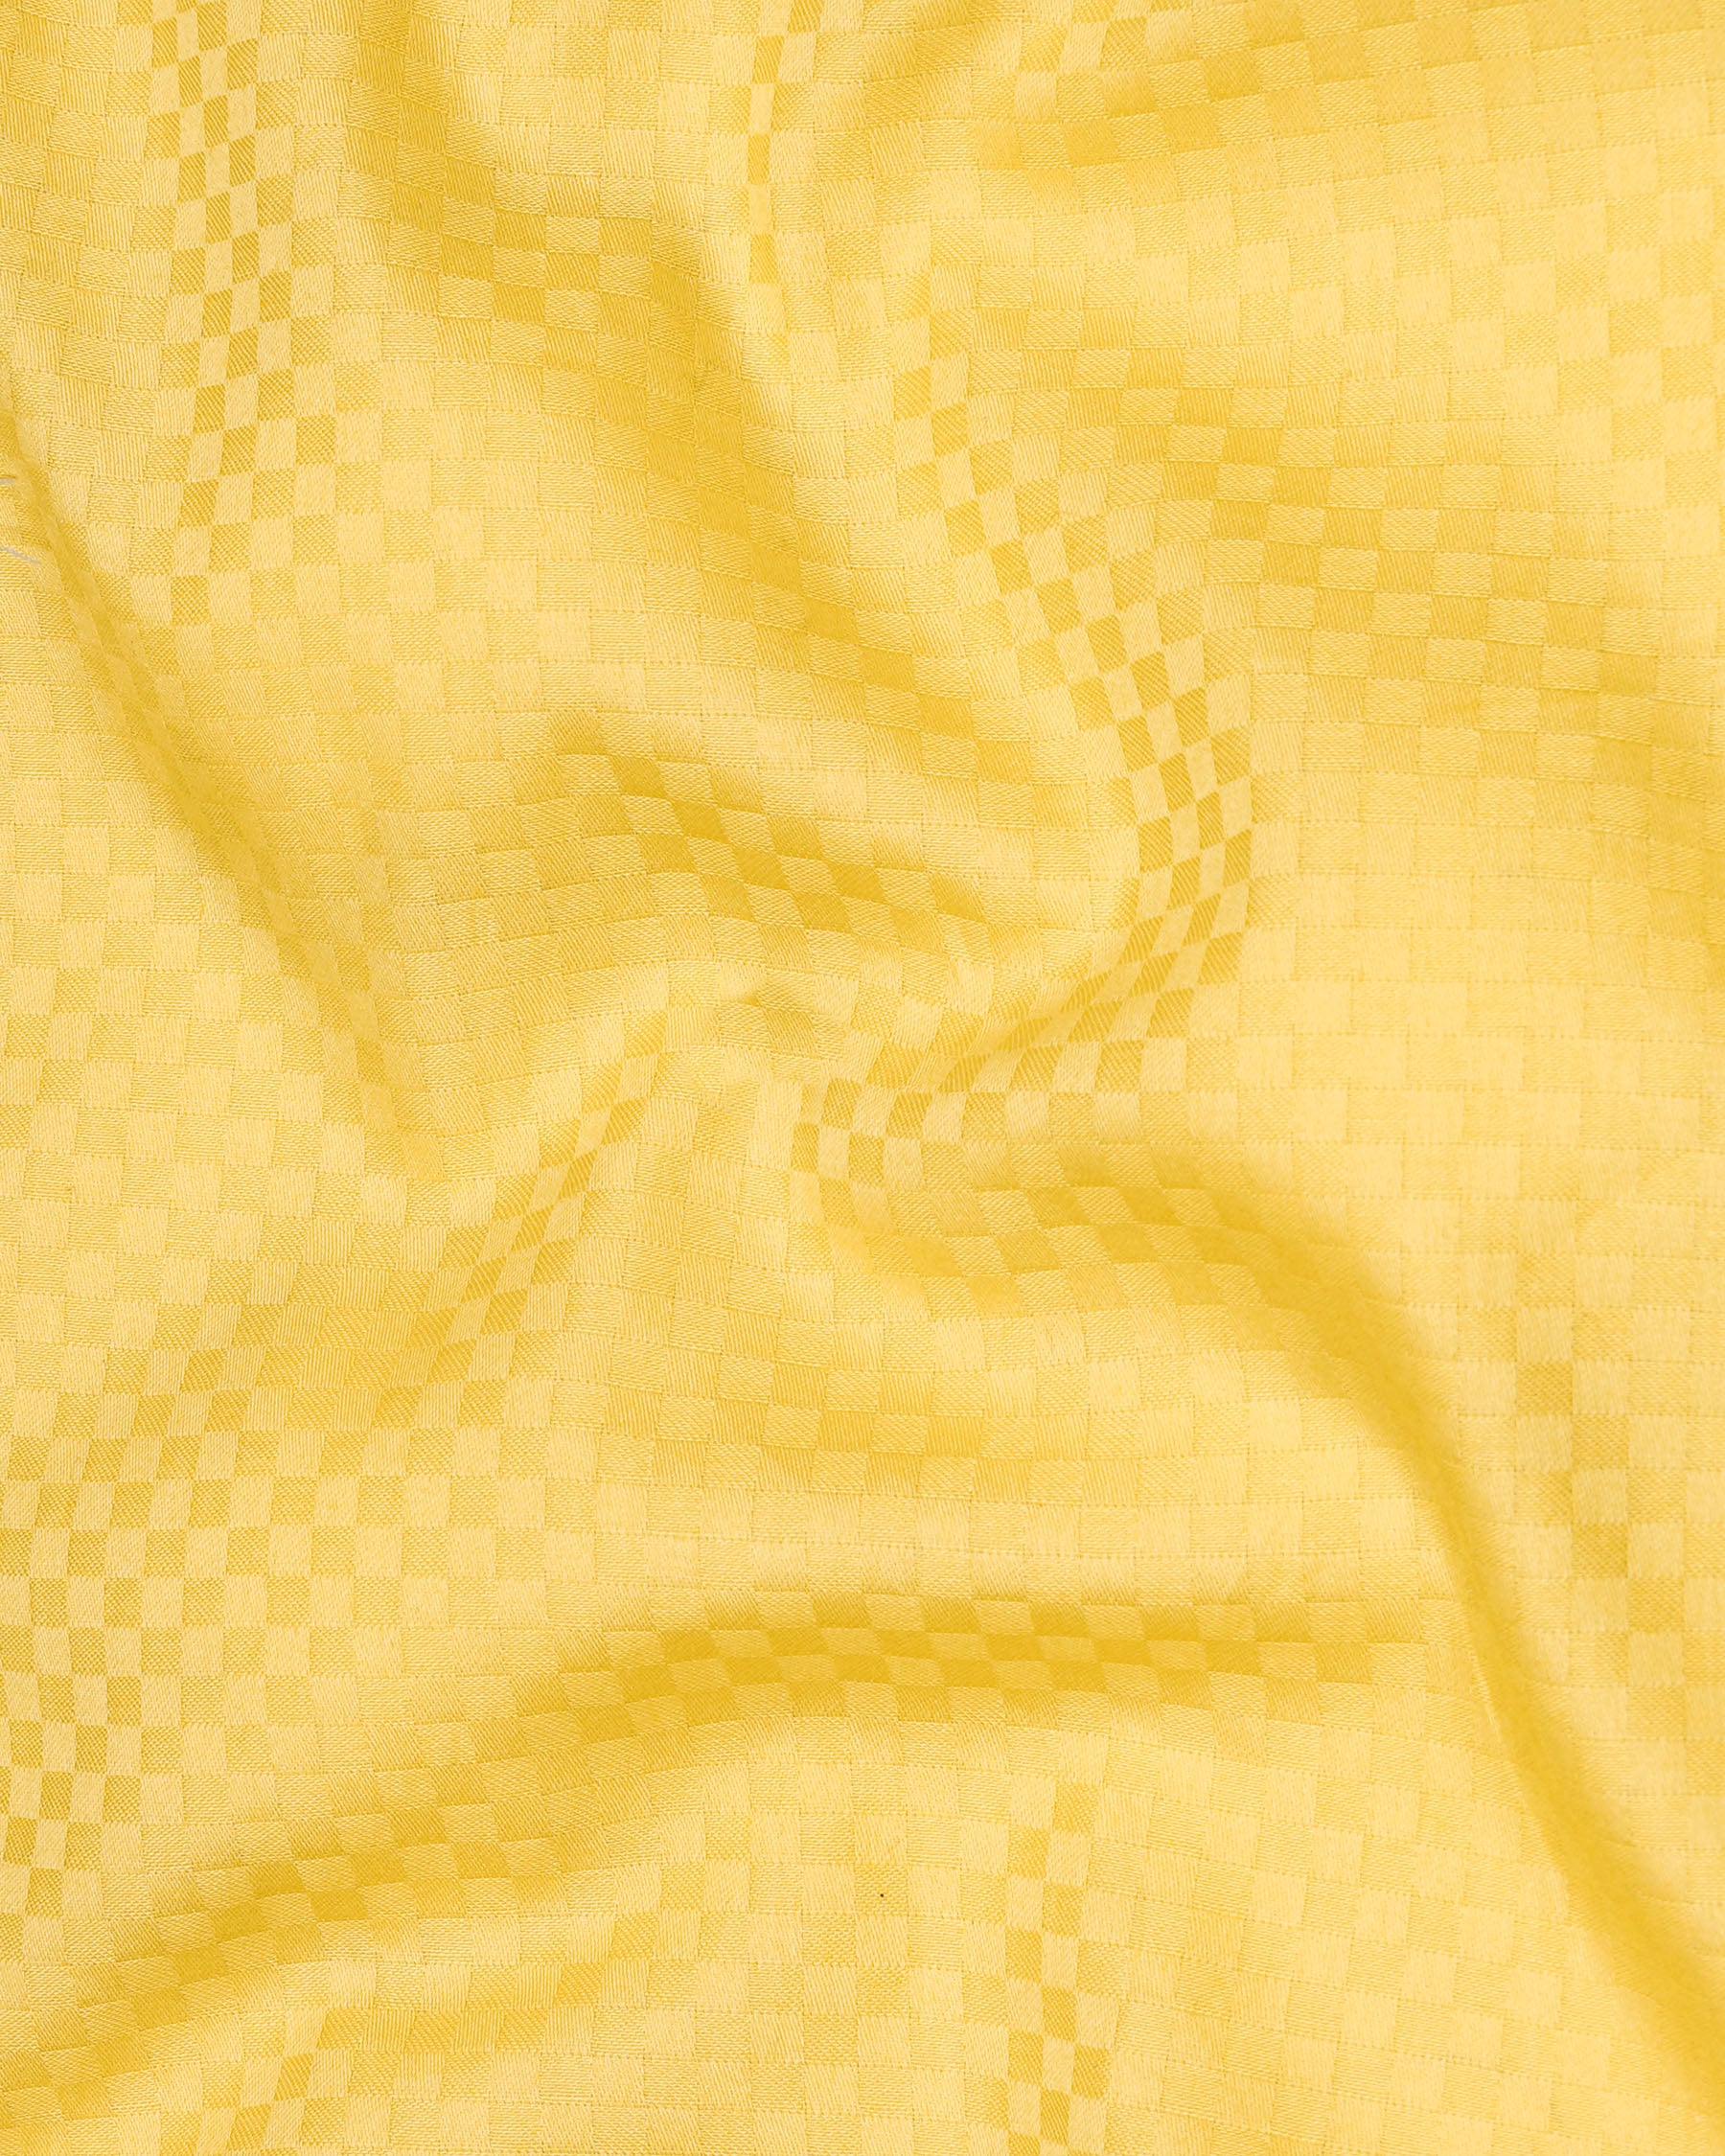 Arylide Yellow Checked Dobby Textured Premium Giza Cotton Shirt 7735-M-YL-38, 7735-M-YL-H-38, 7735-M-YL-39,7735-M-YL-H-39, 7735-M-YL-40, 7735-M-YL-H-40, 7735-M-YL-42, 7735-M-YL-H-42, 7735-M-YL-44, 7735-M-YL-H-44, 7735-M-YL-46, 7735-M-YL-H-46, 7735-M-YL-48, 7735-M-YL-H-48, 7735-M-YL-50, 7735-M-YL-H-50, 7735-M-YL-52, 7735-M-YL-H-52